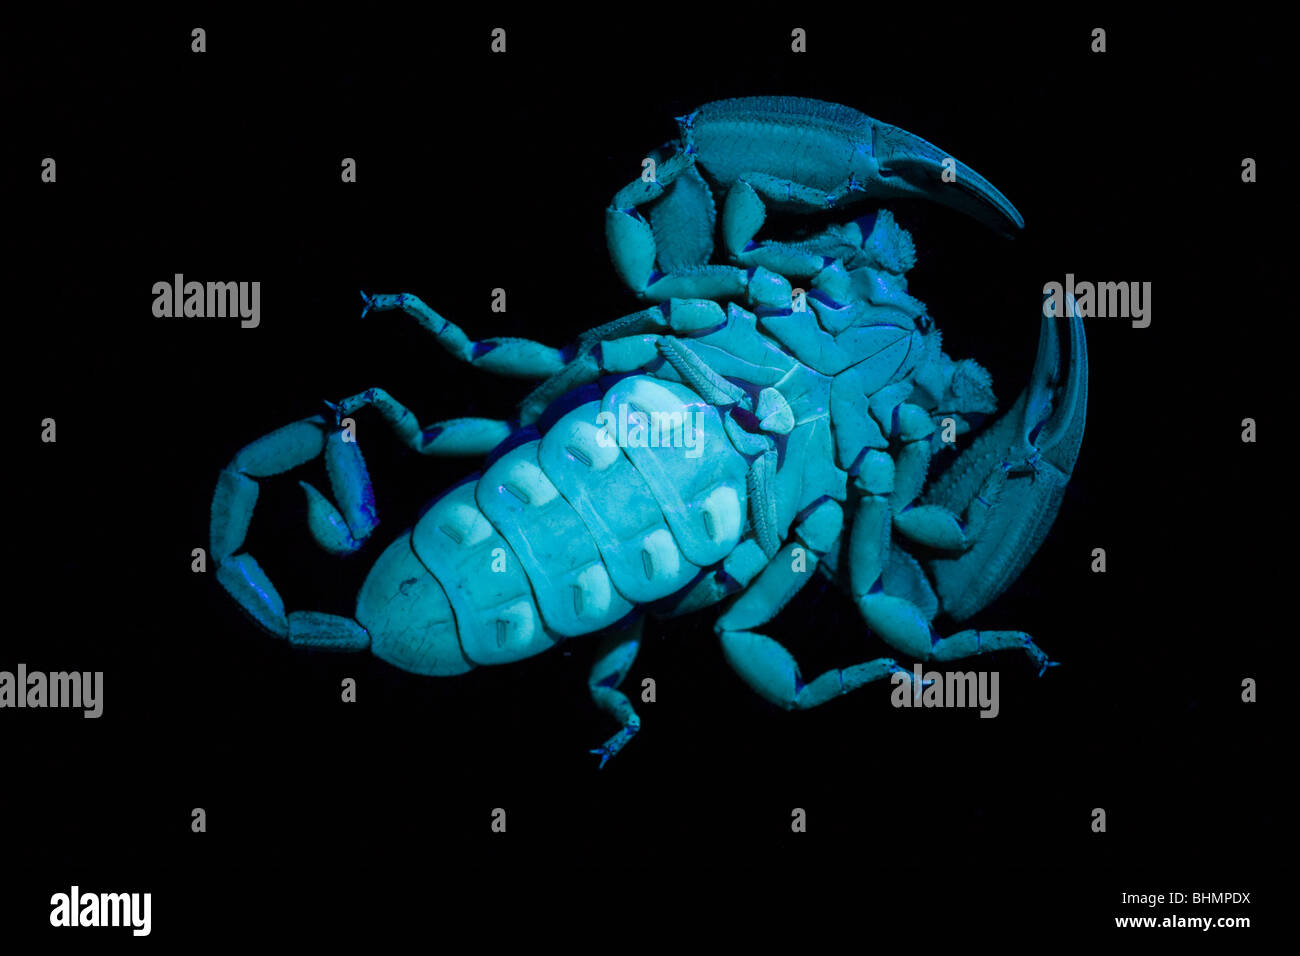 The undersides, including pectines, of a flat rock scorpion (Hadogenes troglodytes) viewed under UV light. Stock Photo